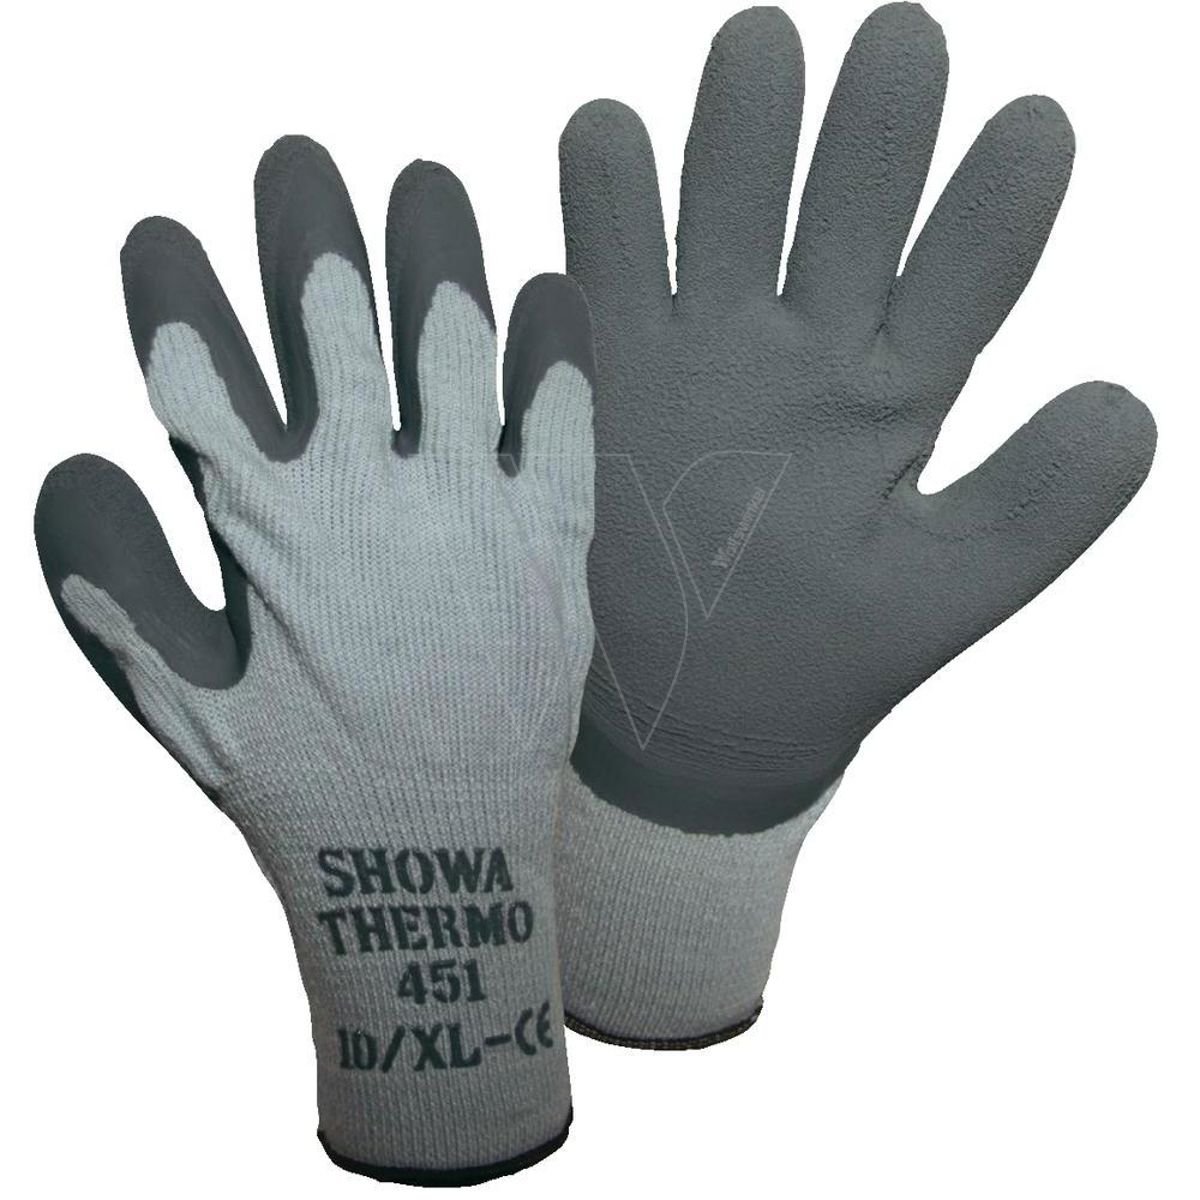 Showa thermo 451 work glove m